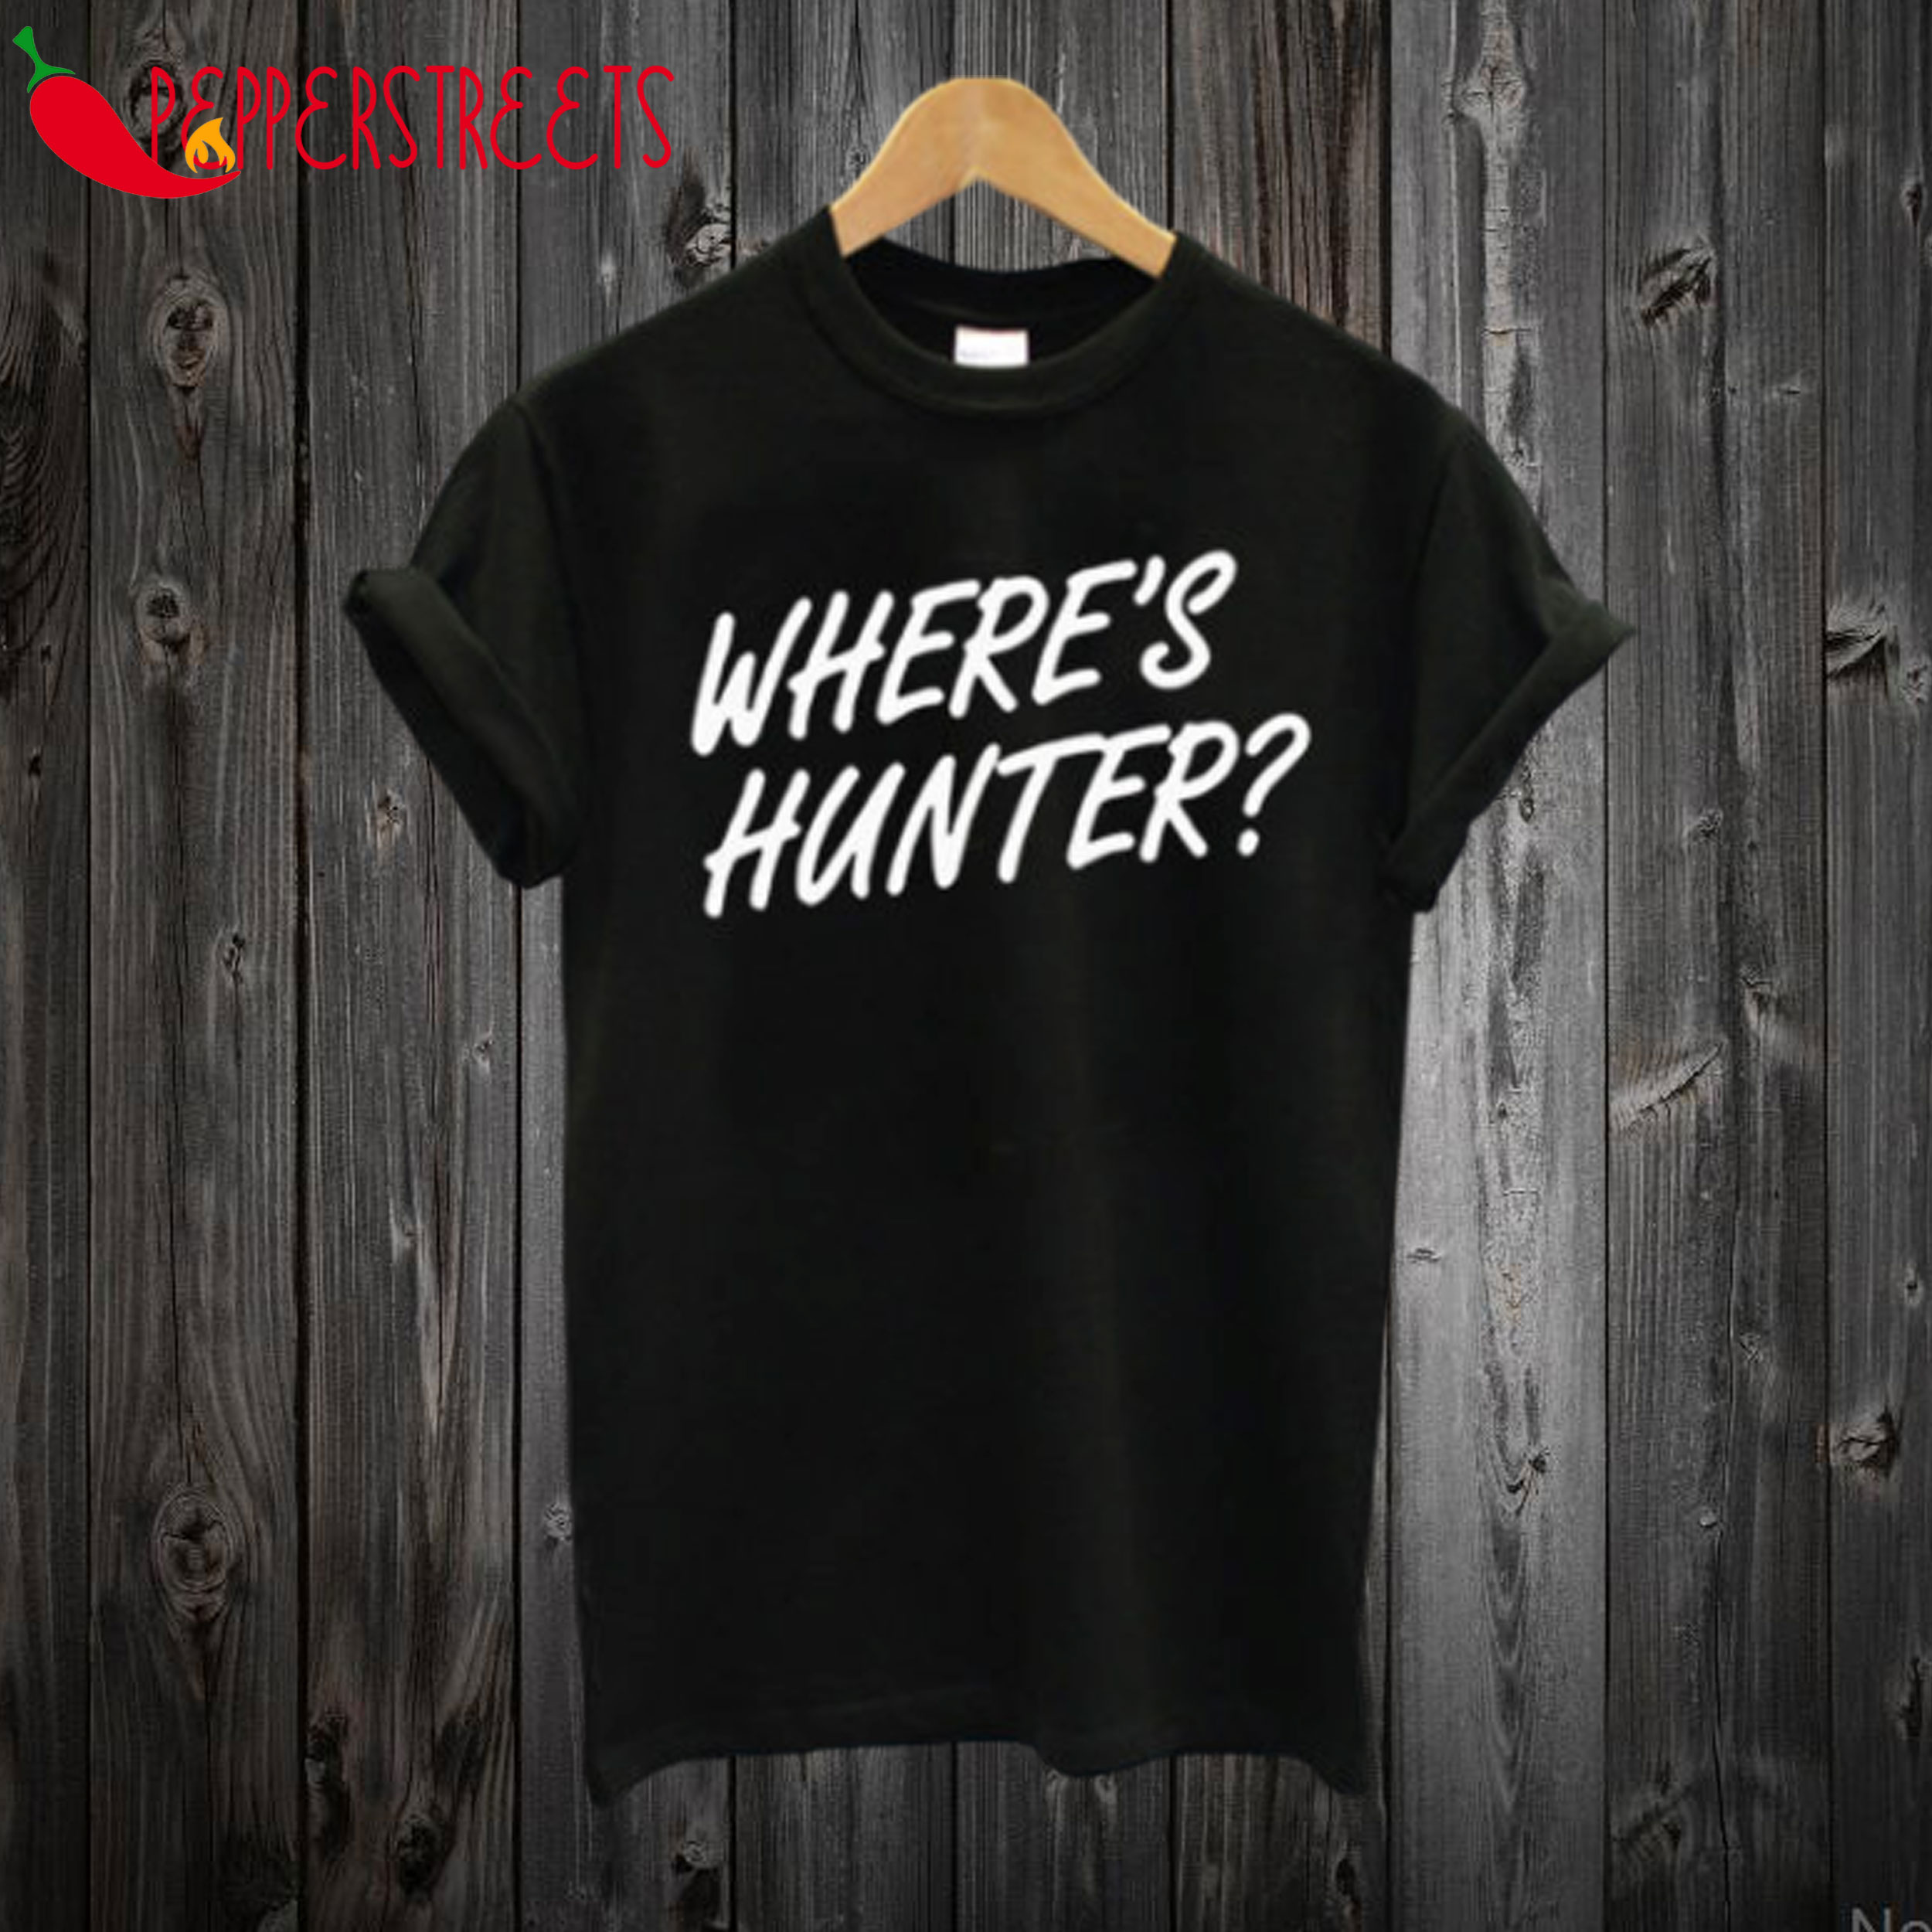 Where’s Hunter Biden T-Shirt